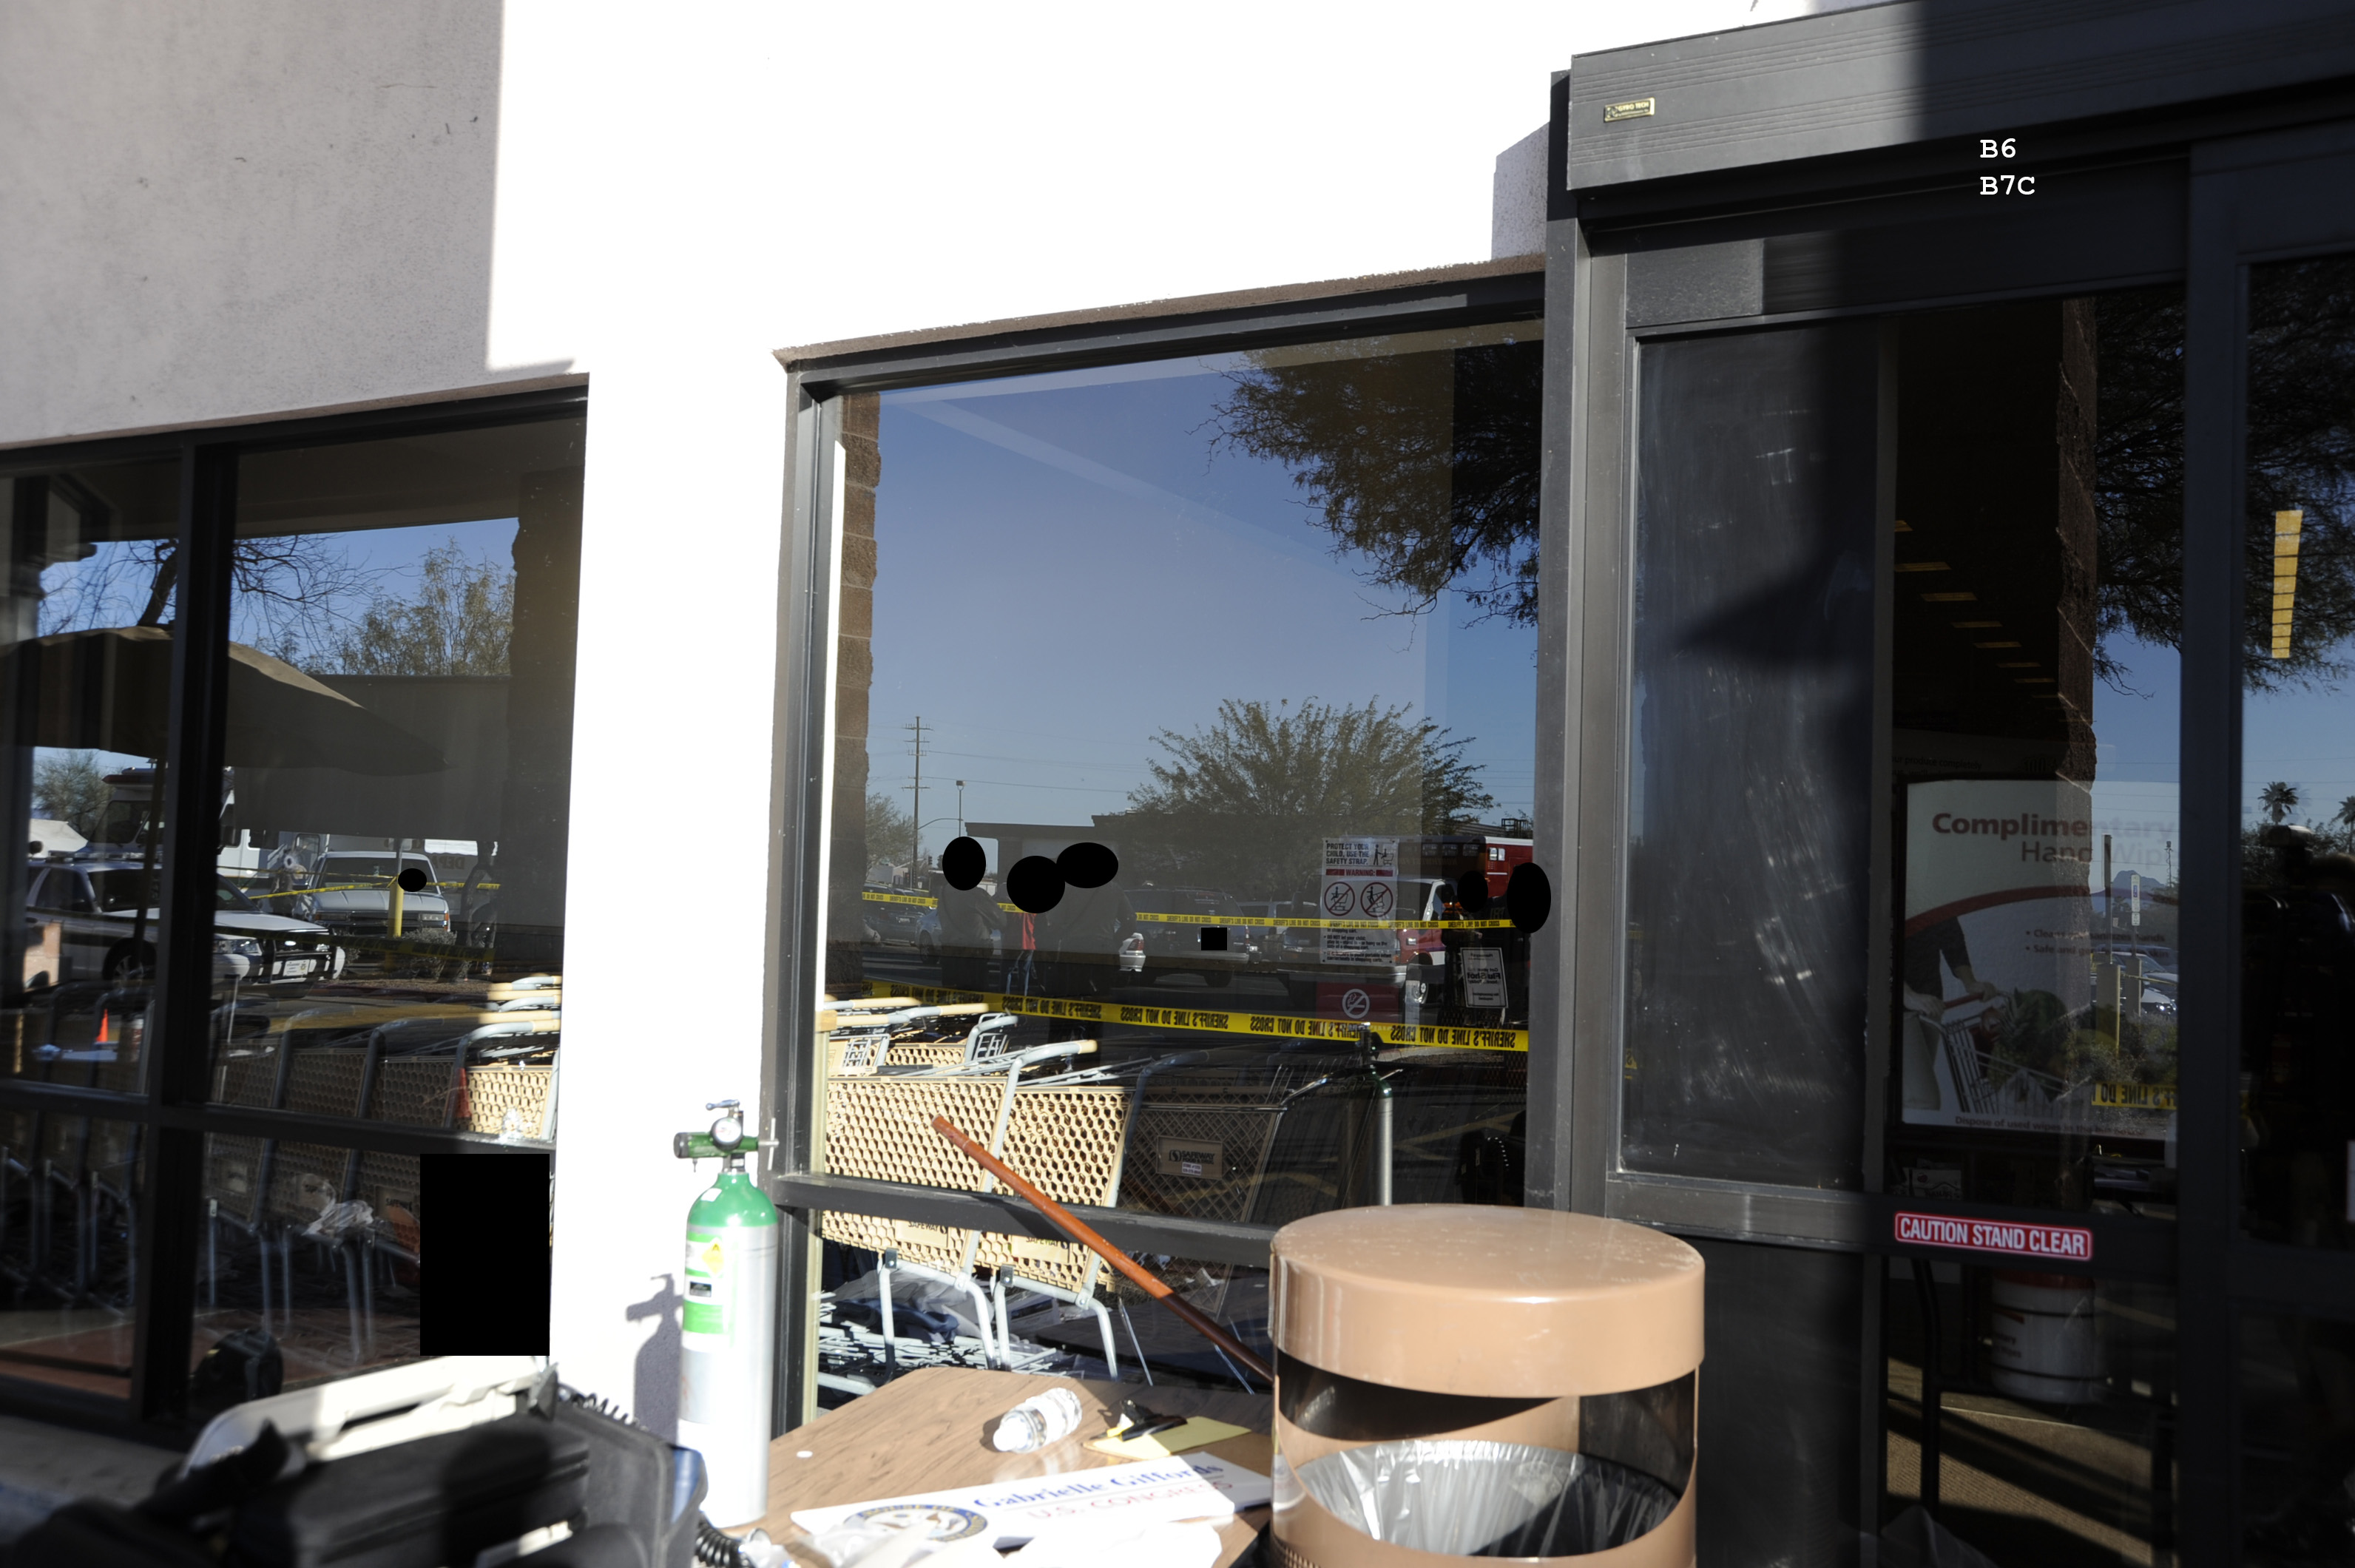  2011 Tucson Shooting Crime Scene - Photograph 64